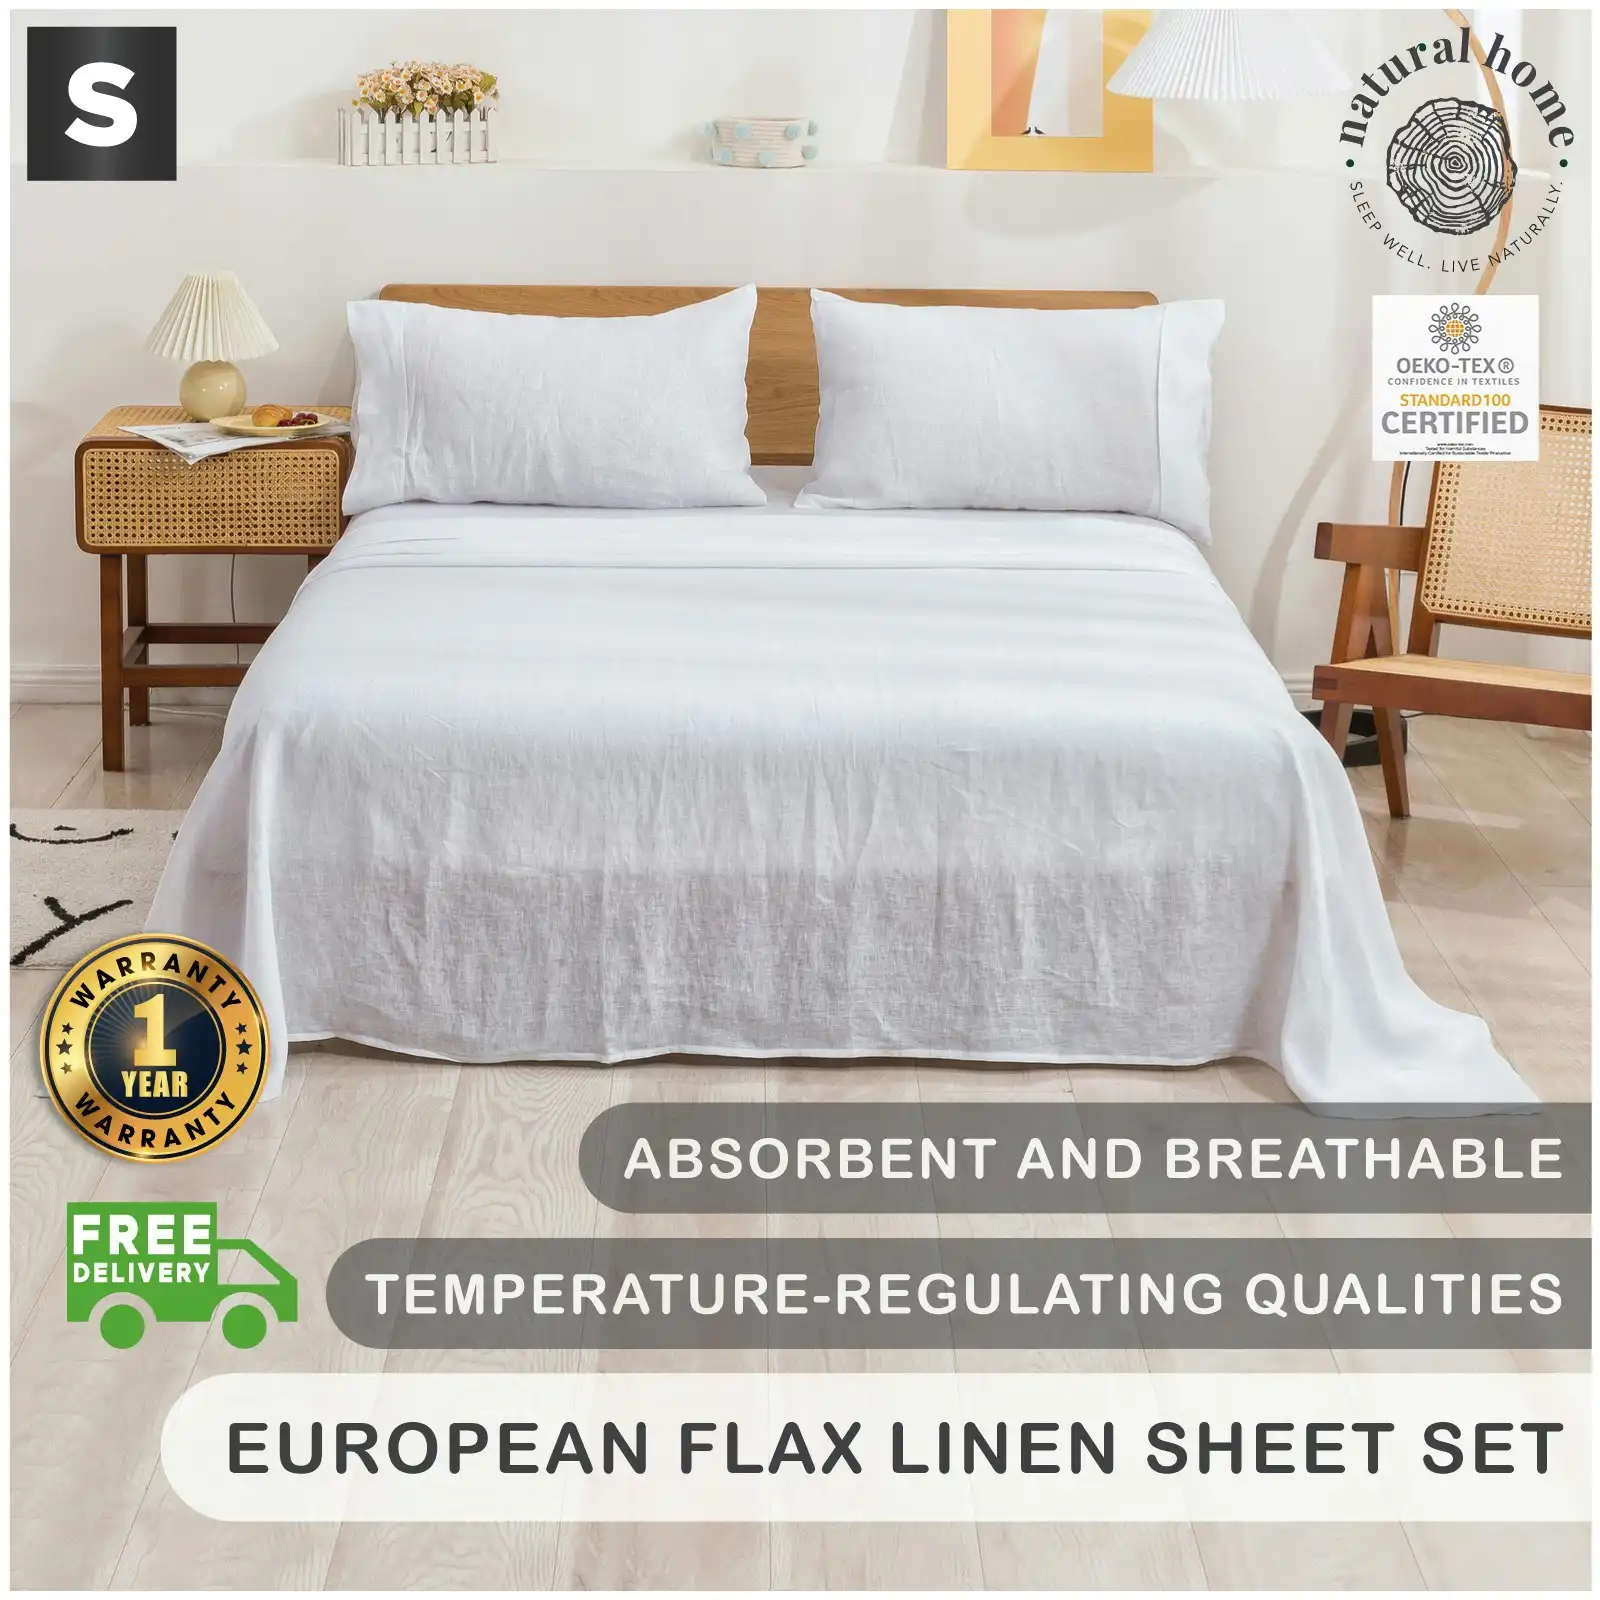 Natural Home 100% European Flax Linen Sheet Set White Single Bed